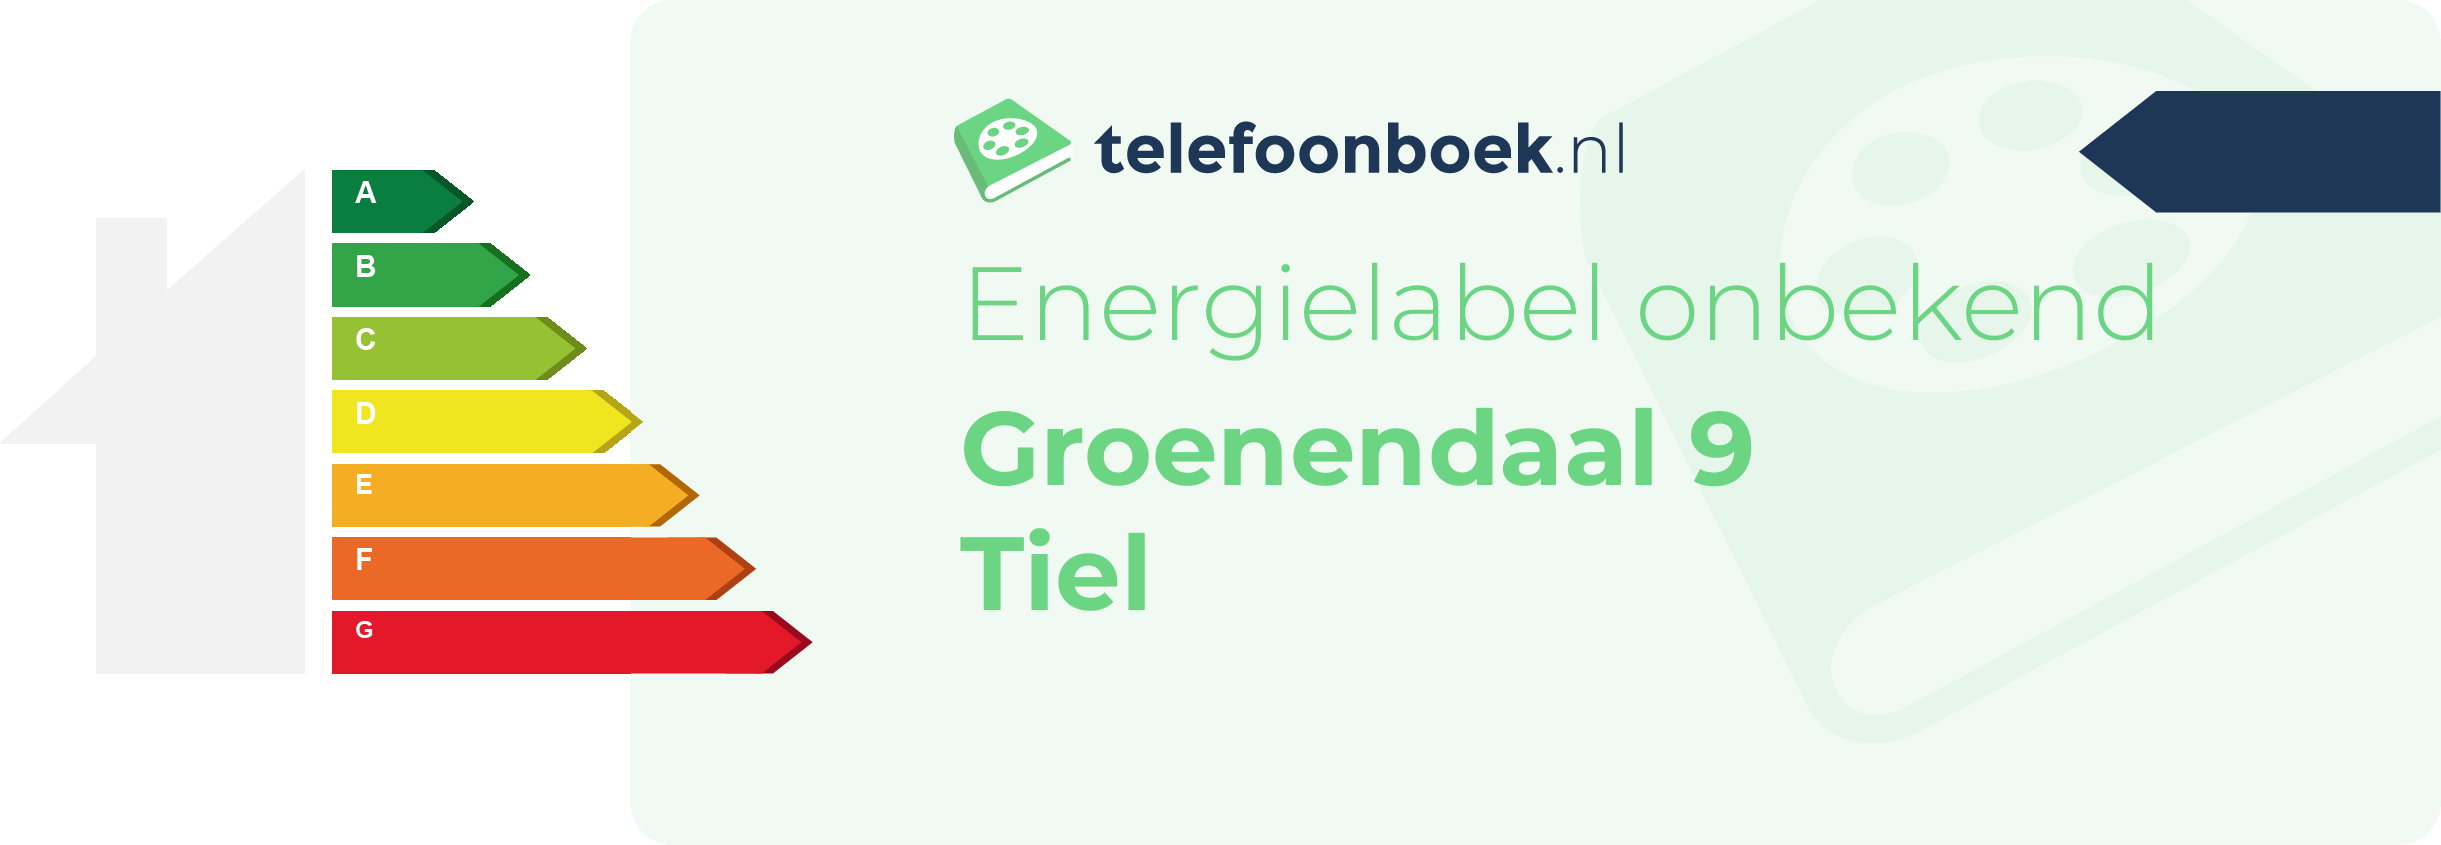 Energielabel Groenendaal 9 Tiel